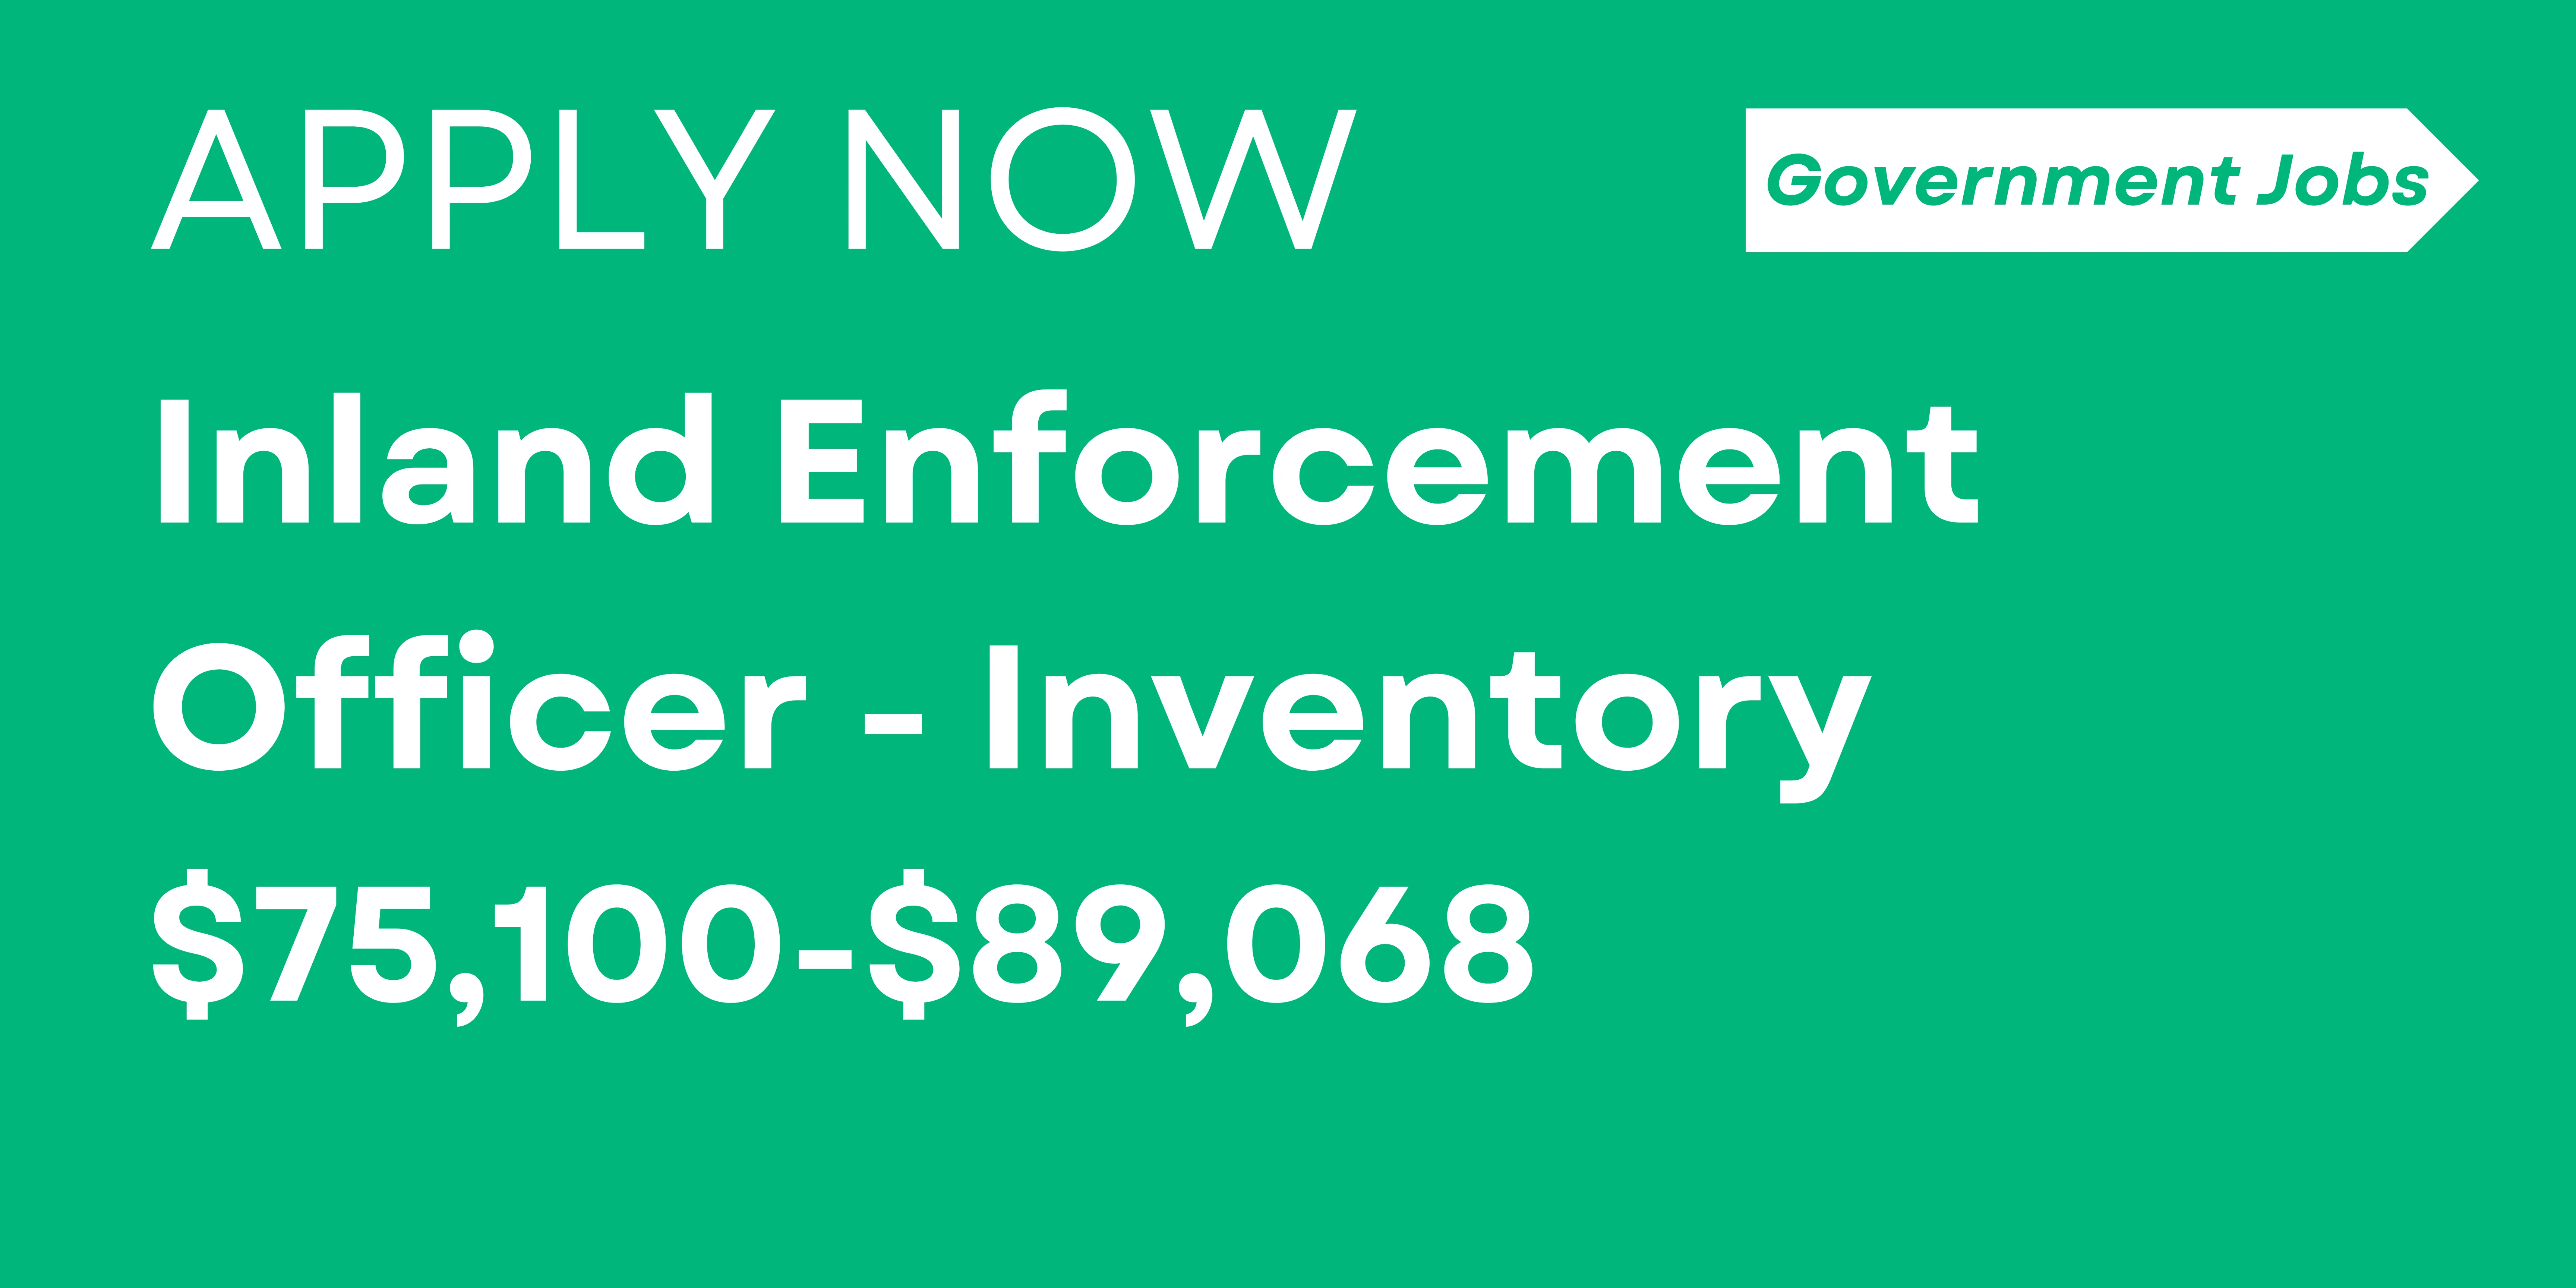 Inland Enforcement Officer - Inventory